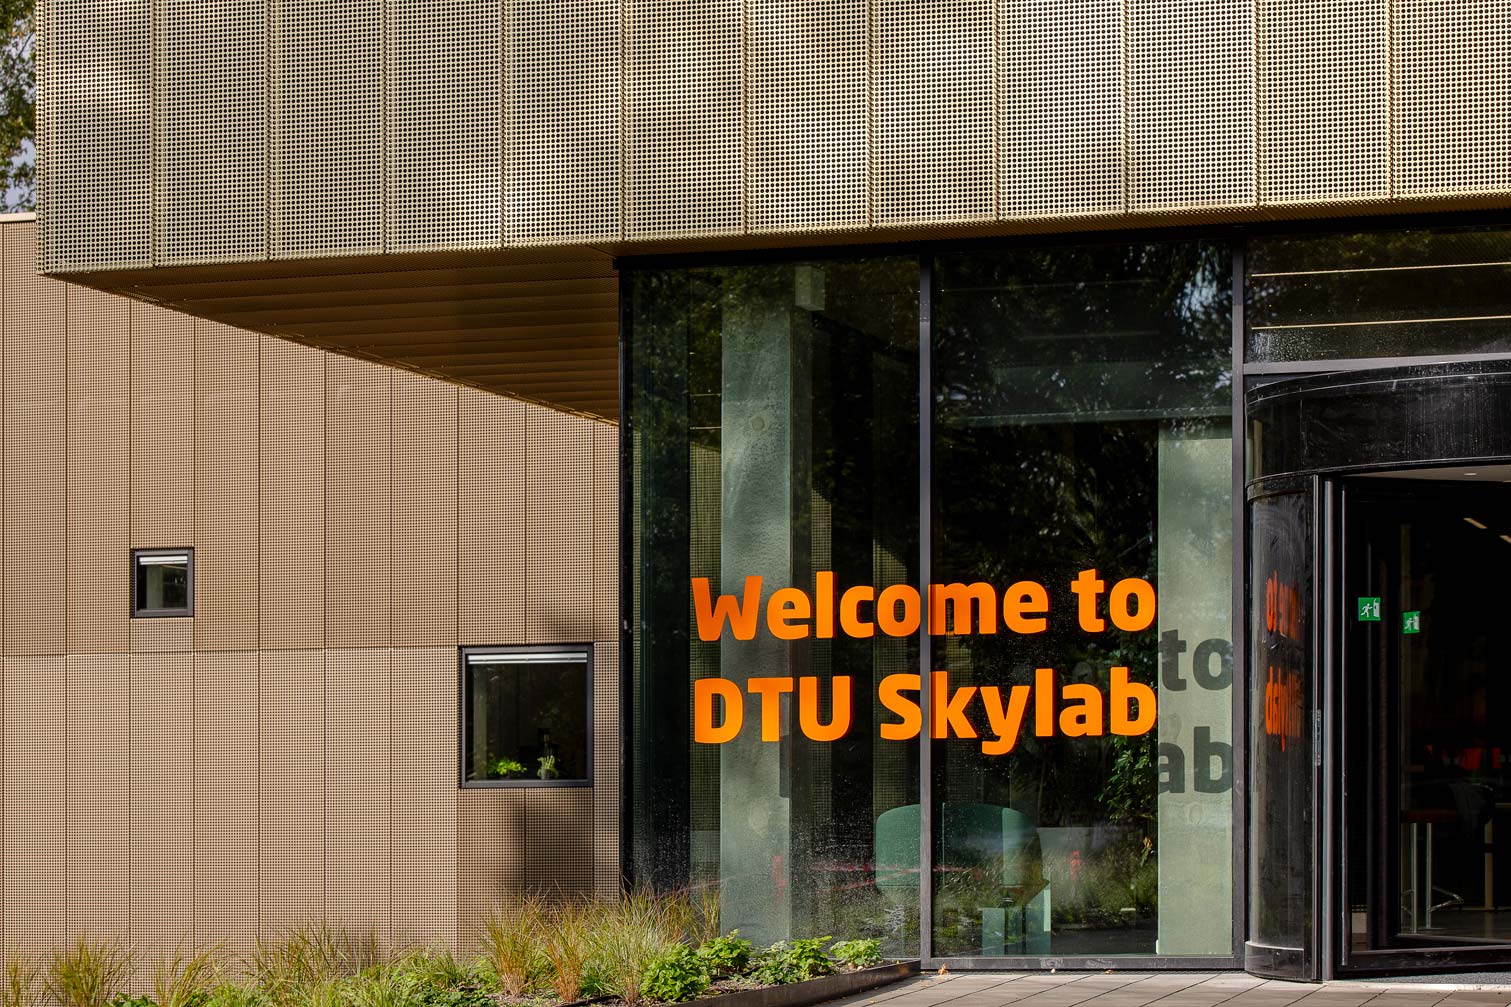 Photo of the entrance to DTU Skylab